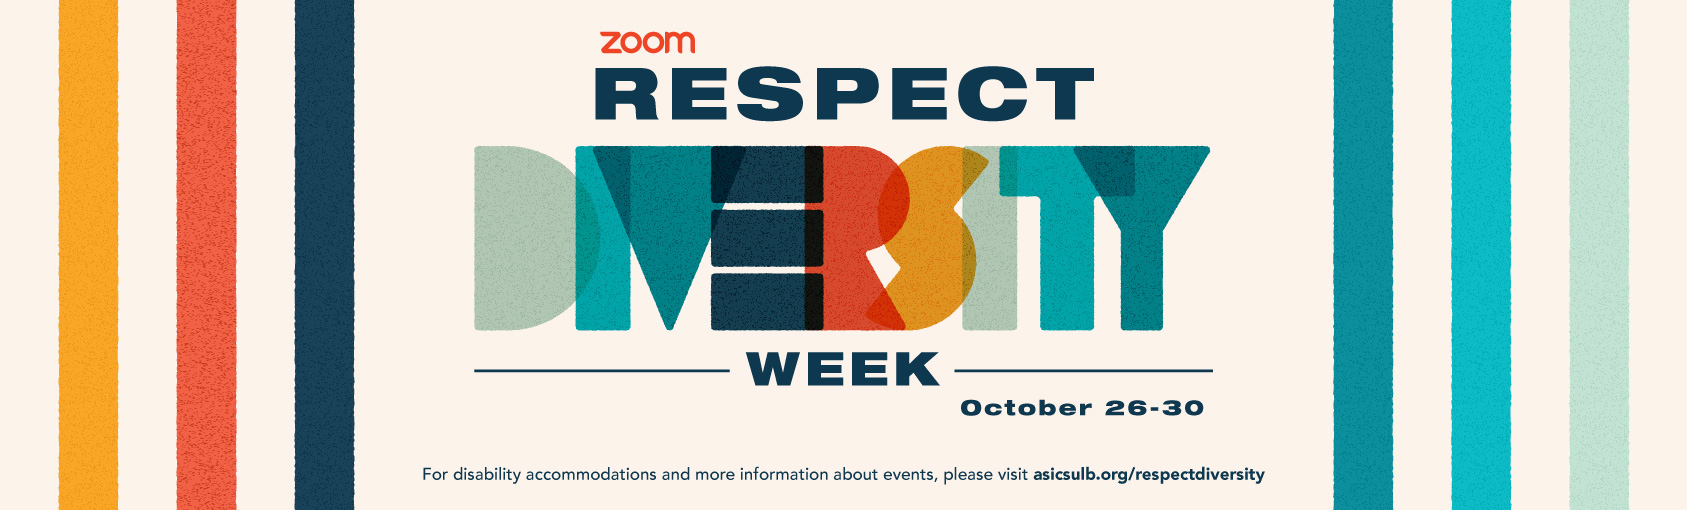 respect diversity week